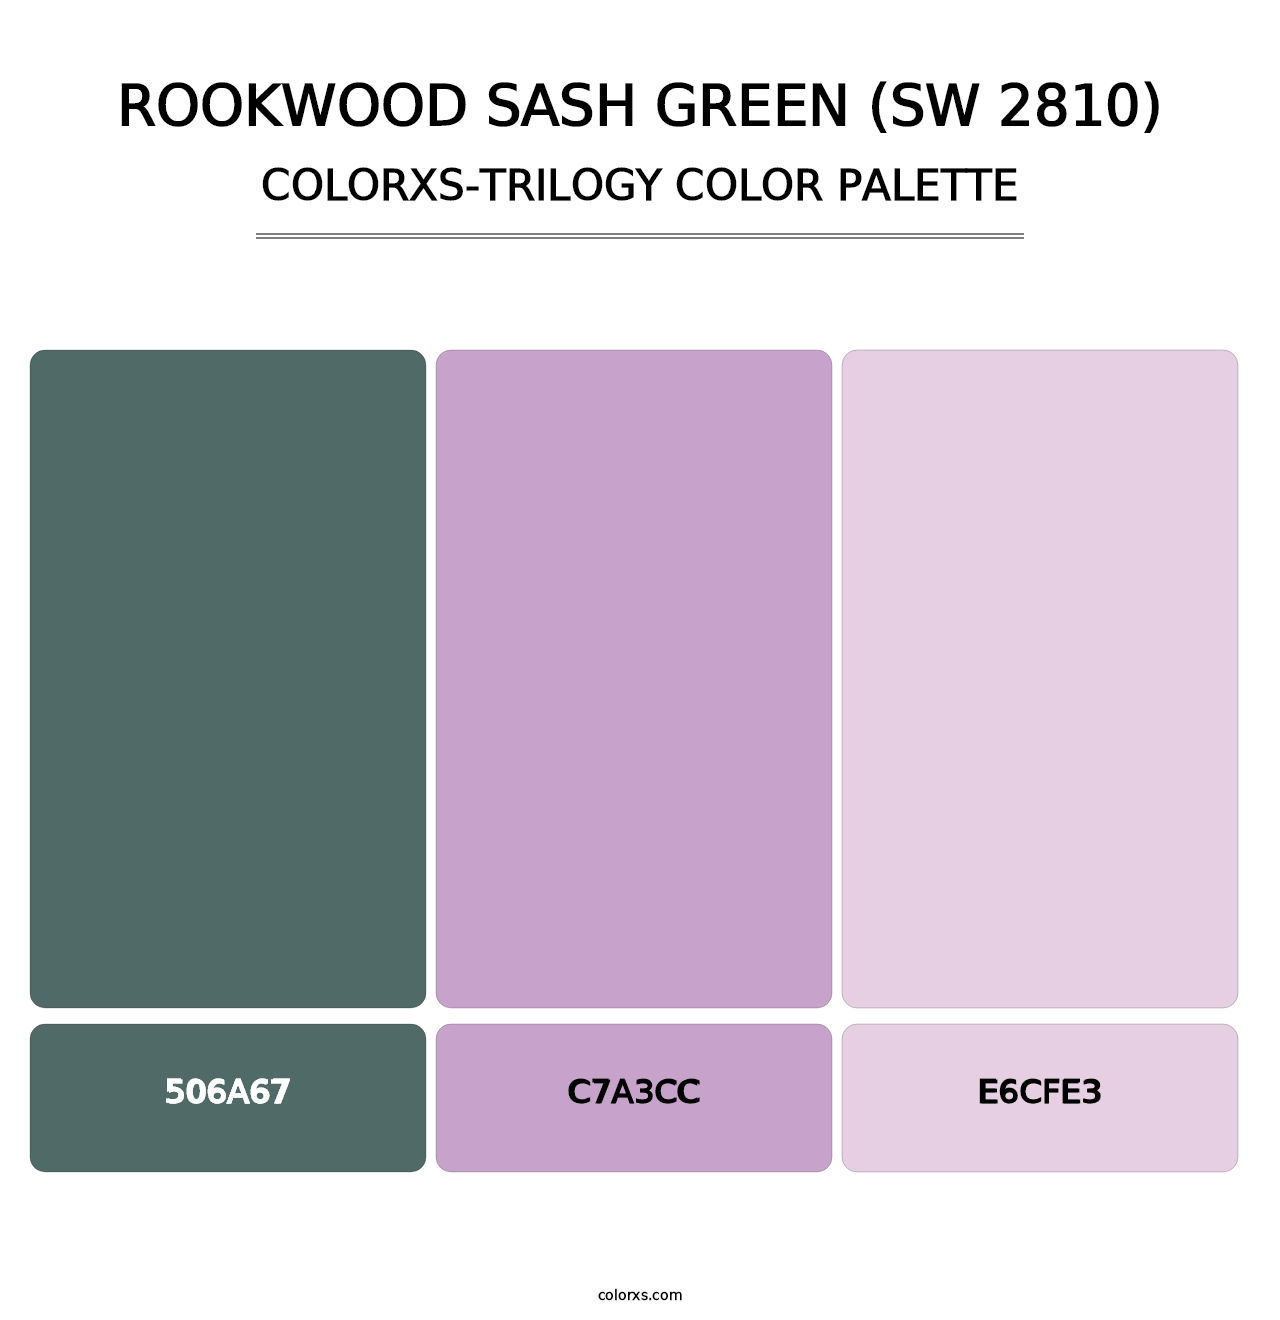 Rookwood Sash Green (SW 2810) - Colorxs Trilogy Palette